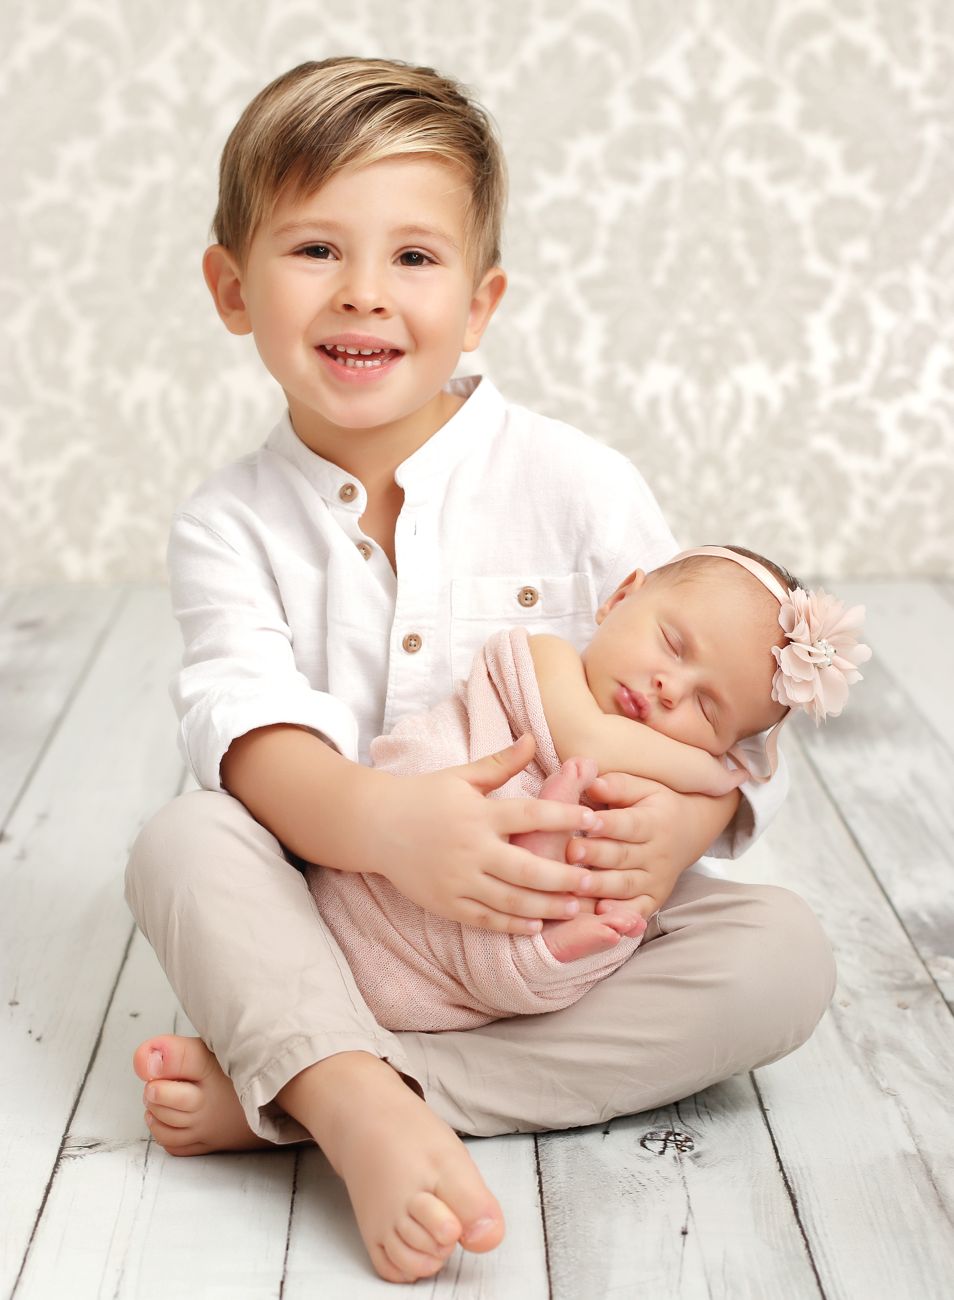 Newborn focení se sourozenci | © Fotoprome.cz